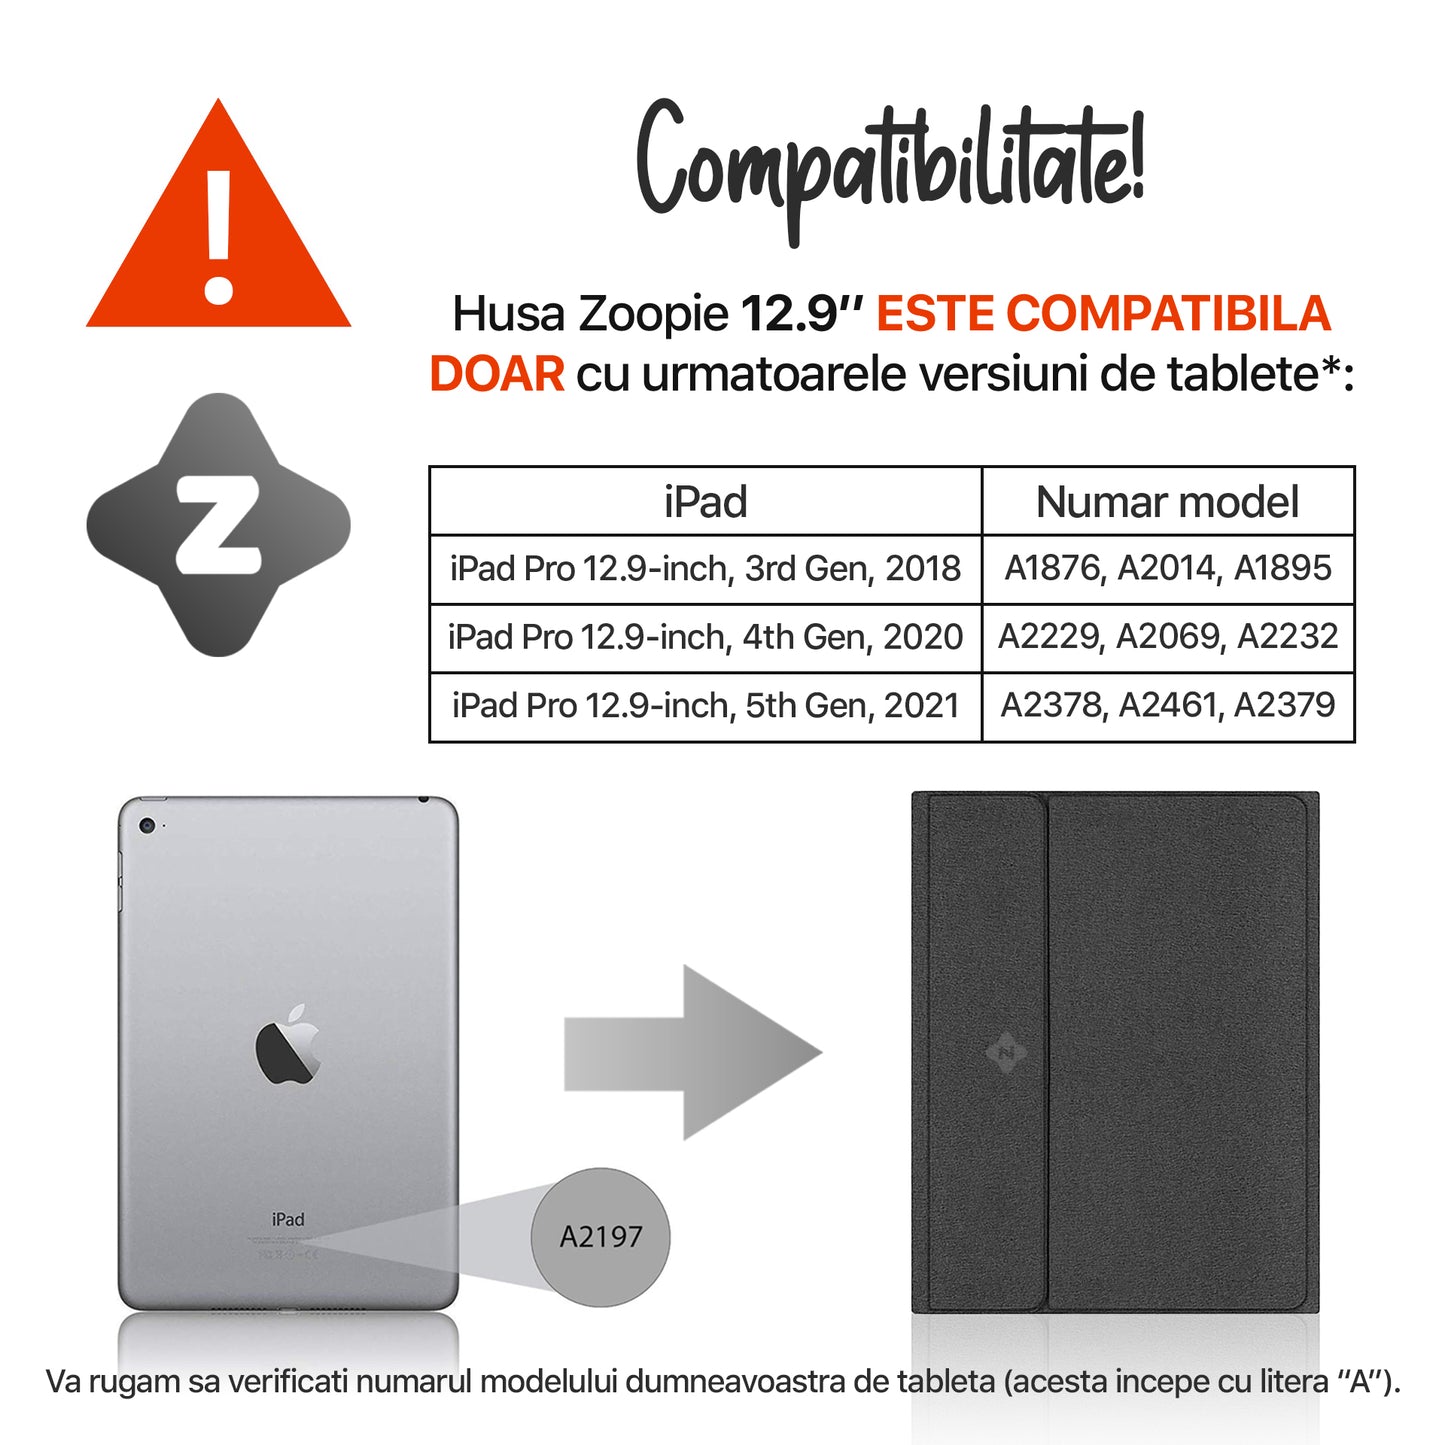 Husa cu Tastatura, Zoopie®, compatibila cu Apple iPad Pro 12.9" 5th Gen 2021 / 4th Gen 2020 / 3rd Gen 2018, Wireless, Bluetooth, Iluminata LED, Carcasa protectie, Negru